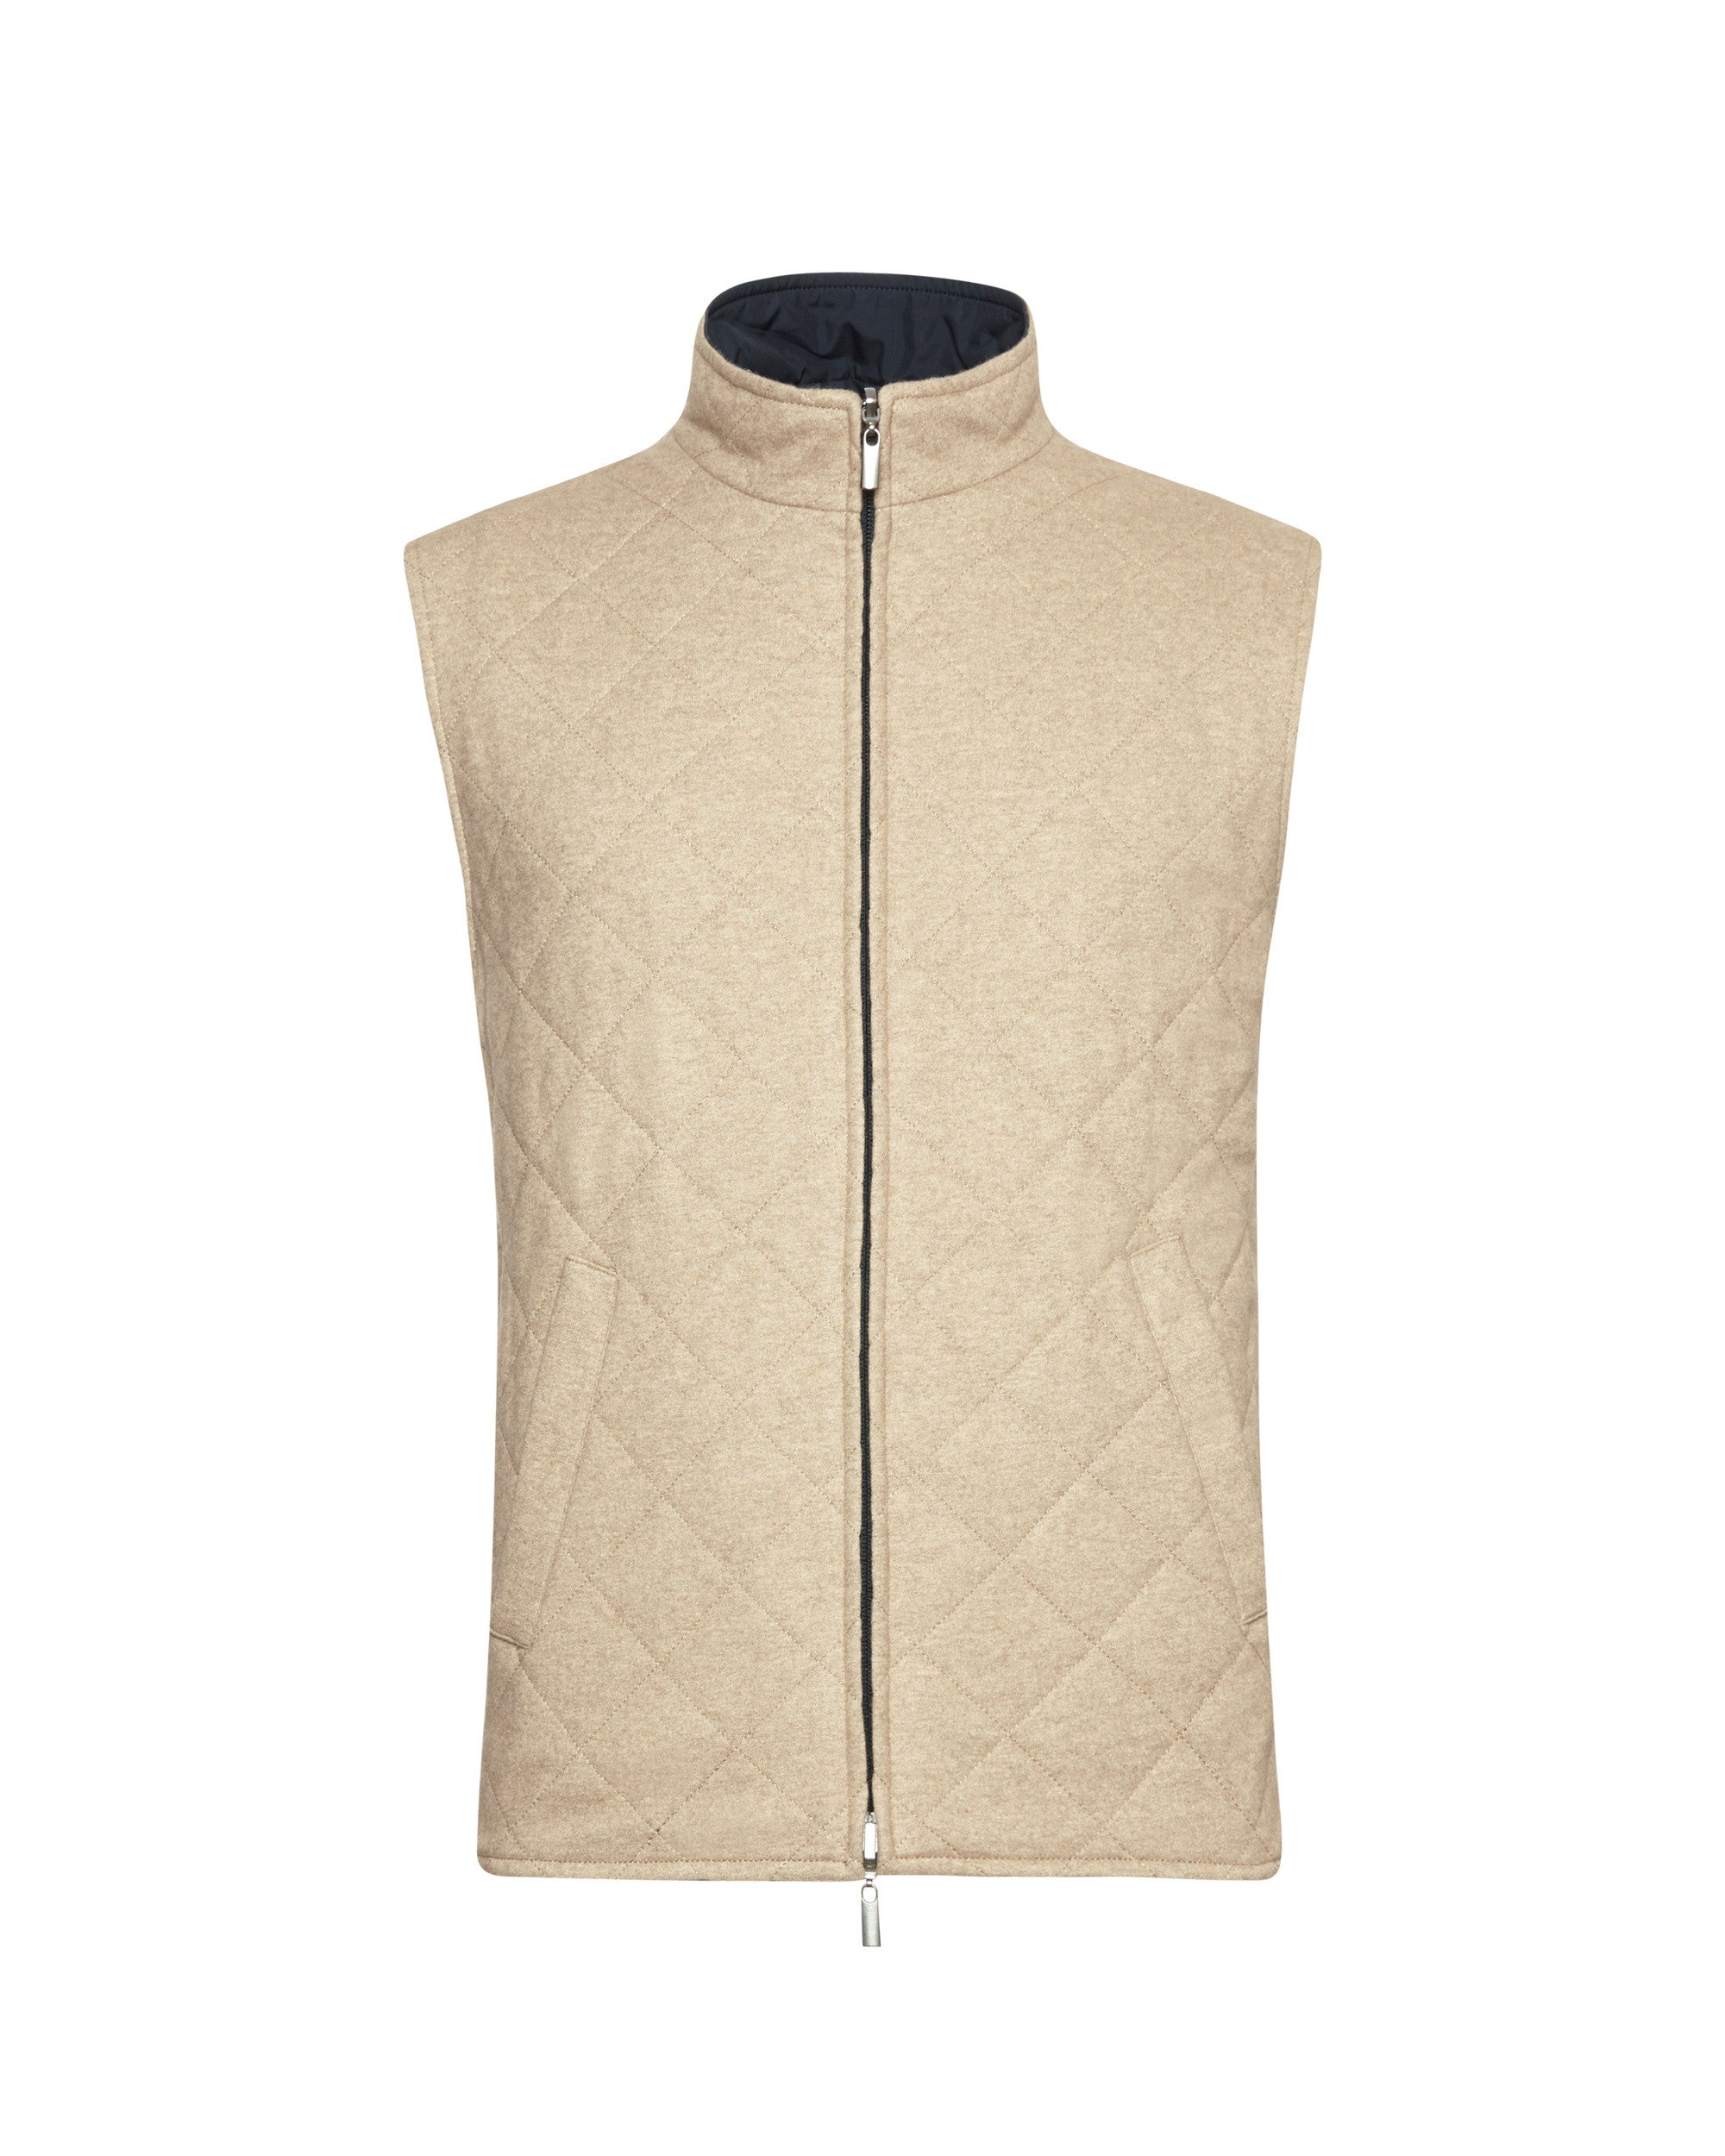 Beige/Blue men's reversible quilted cashmere vest